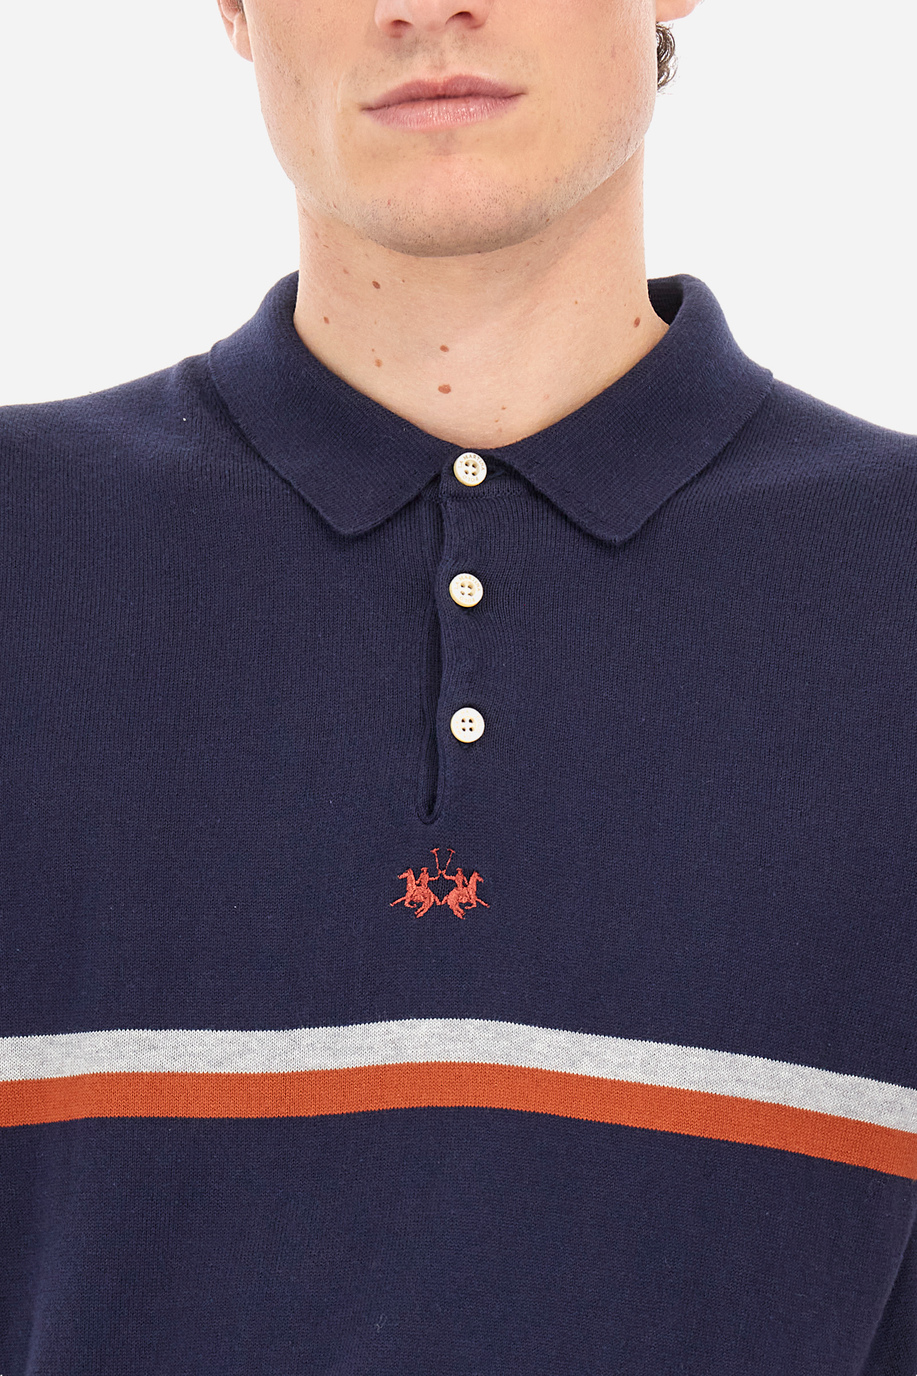 Polo tricoté homme coupe classique - Yerermia - Polo Academy | La Martina - Official Online Shop